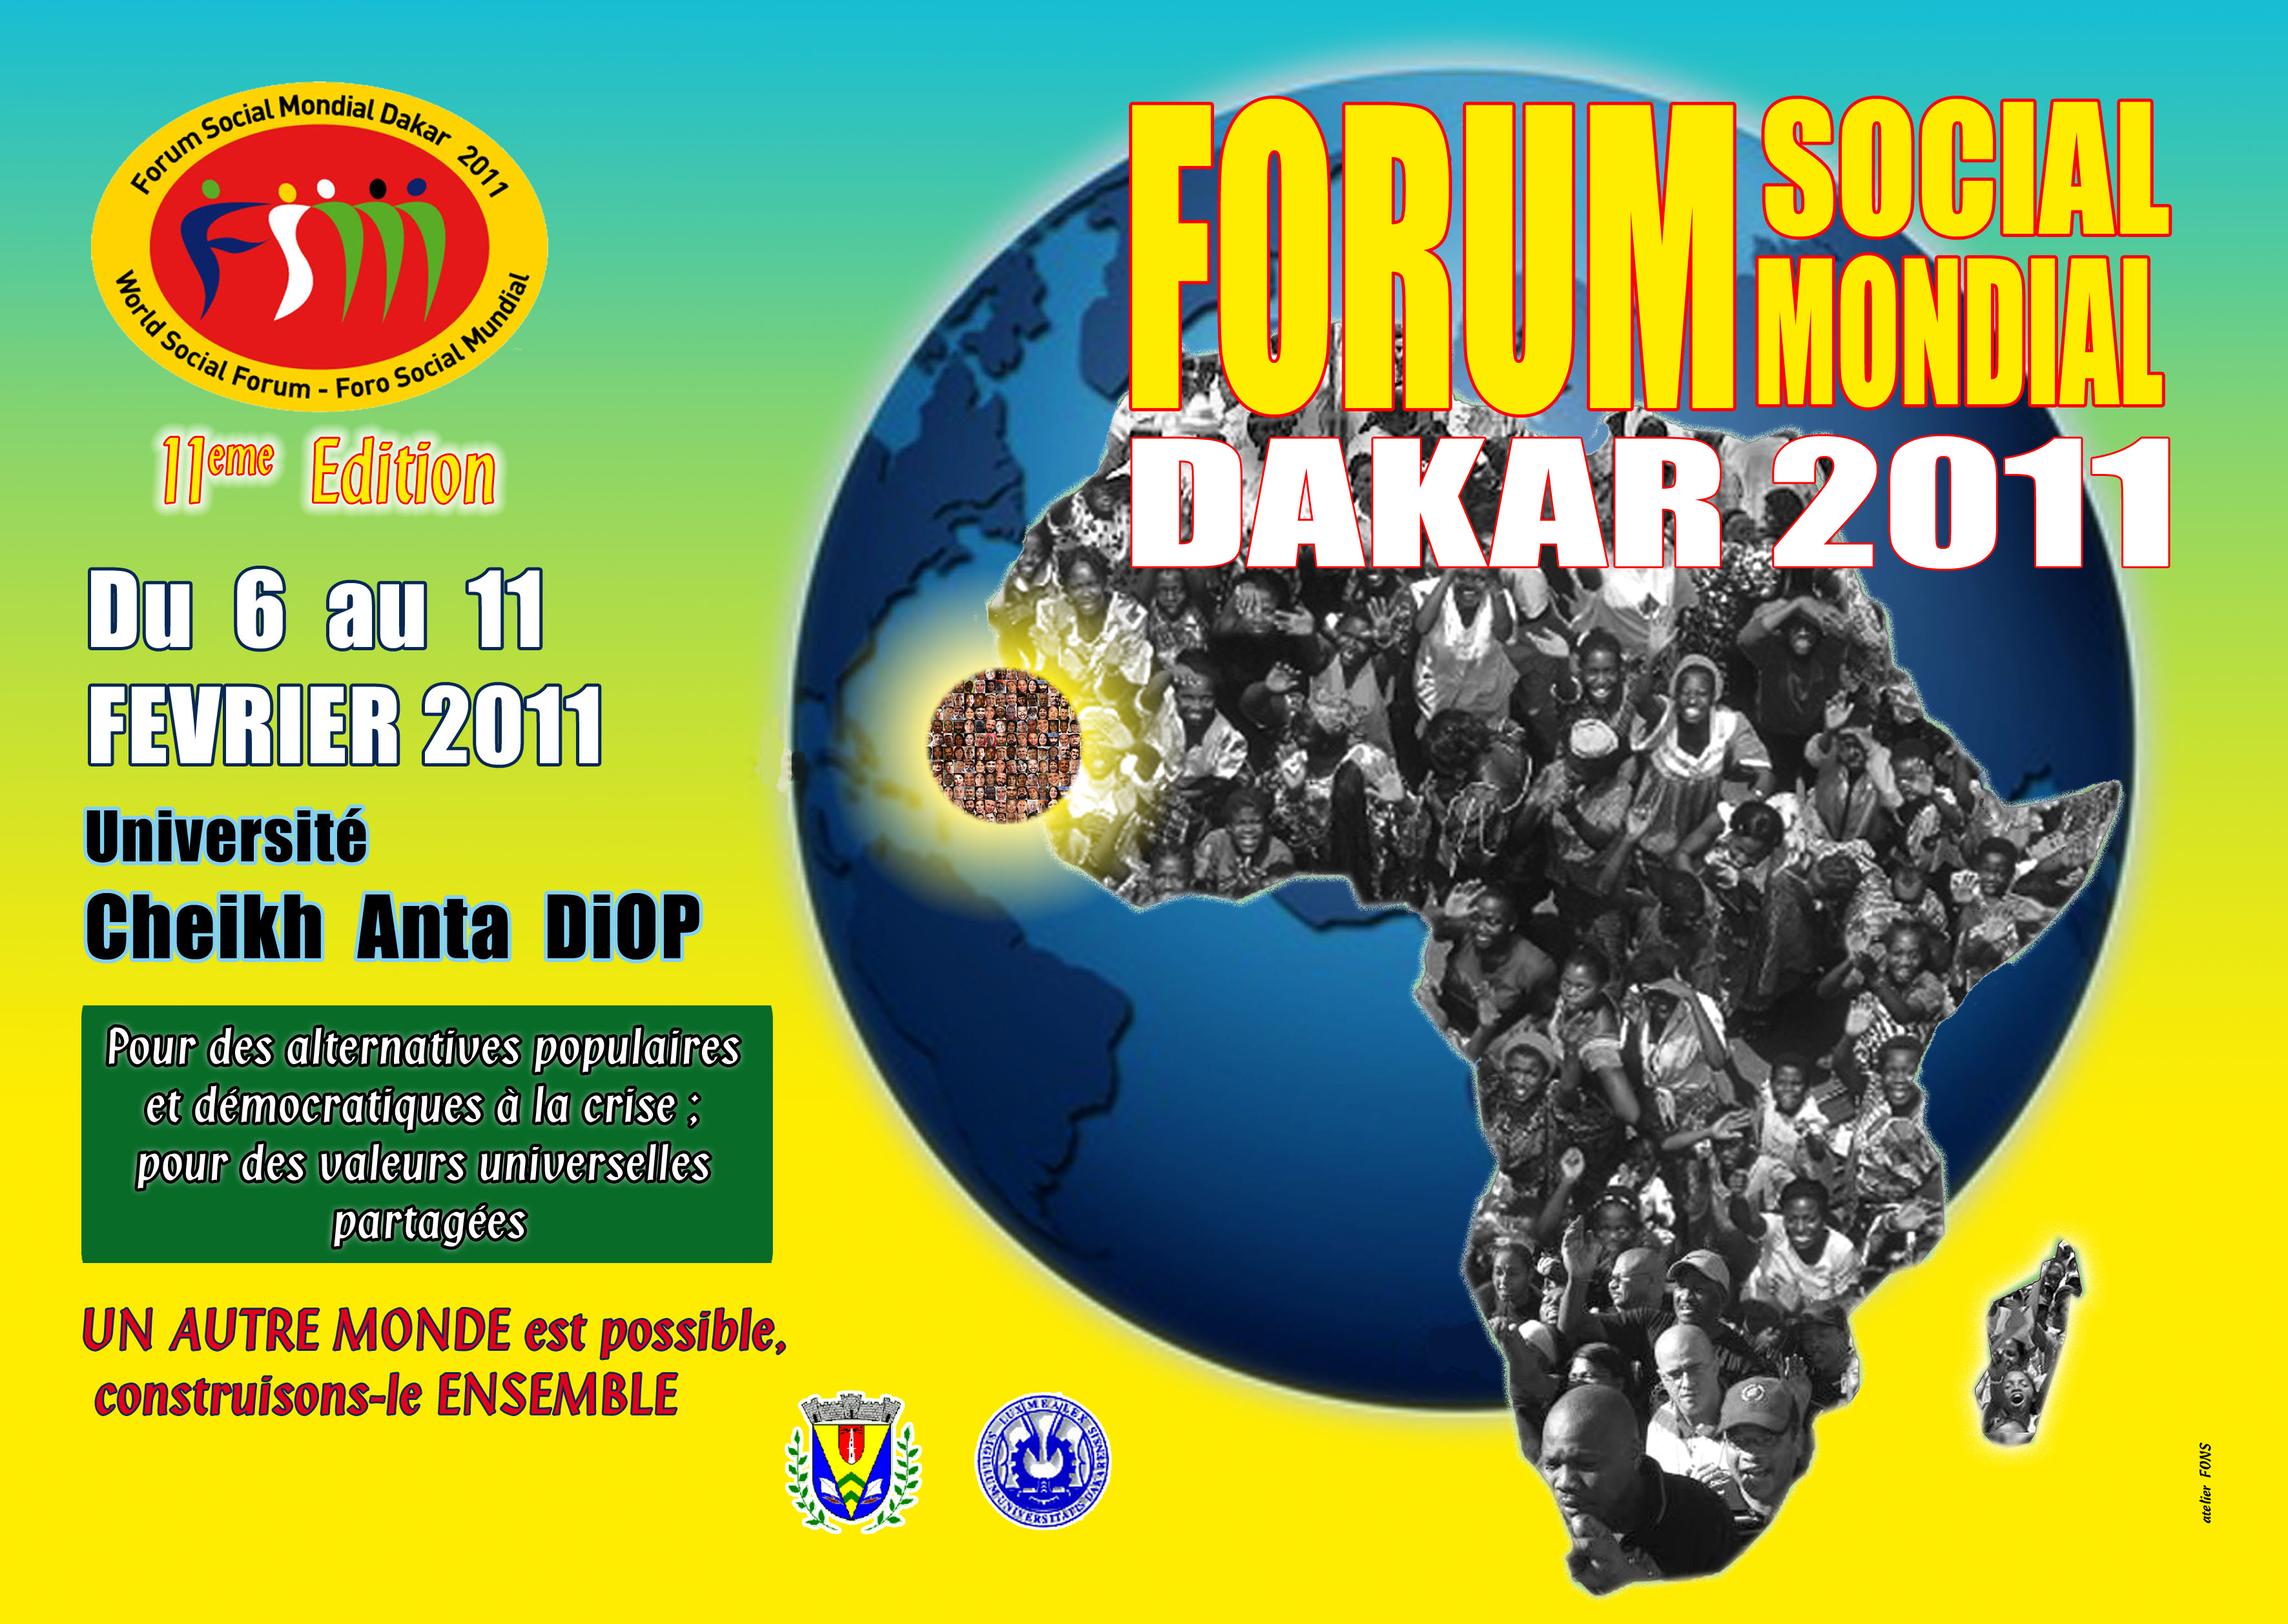 world_social_forum_poster